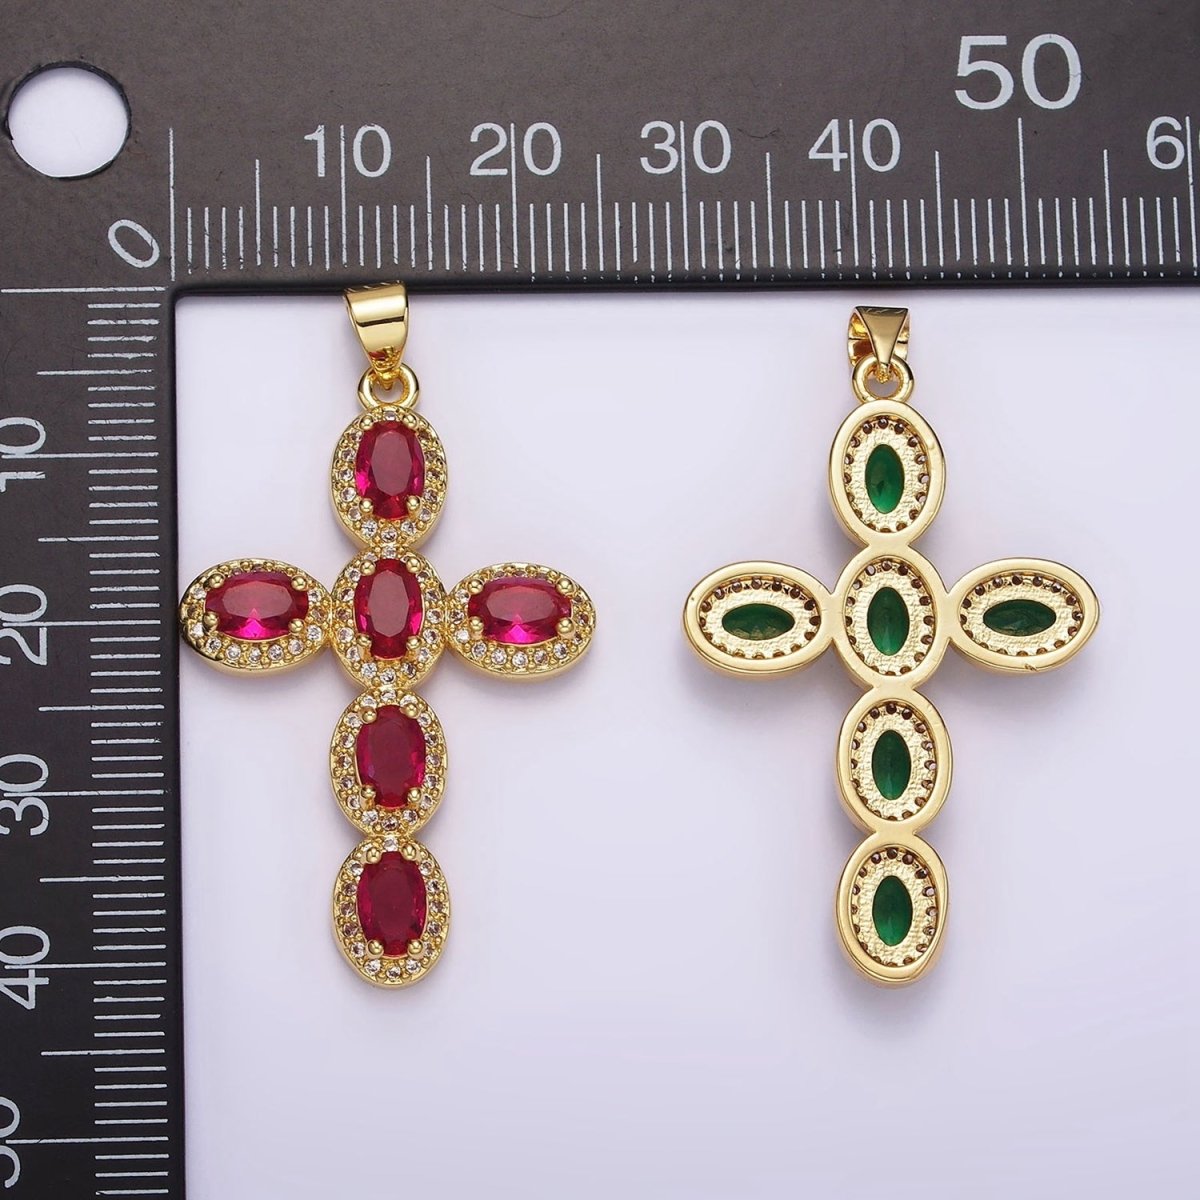 14K Gold Filled Fuchsia, Pink, Green Oval Micro Paved CZ Latin Cross Pendant | AA1095 - AA1096 - DLUXCA